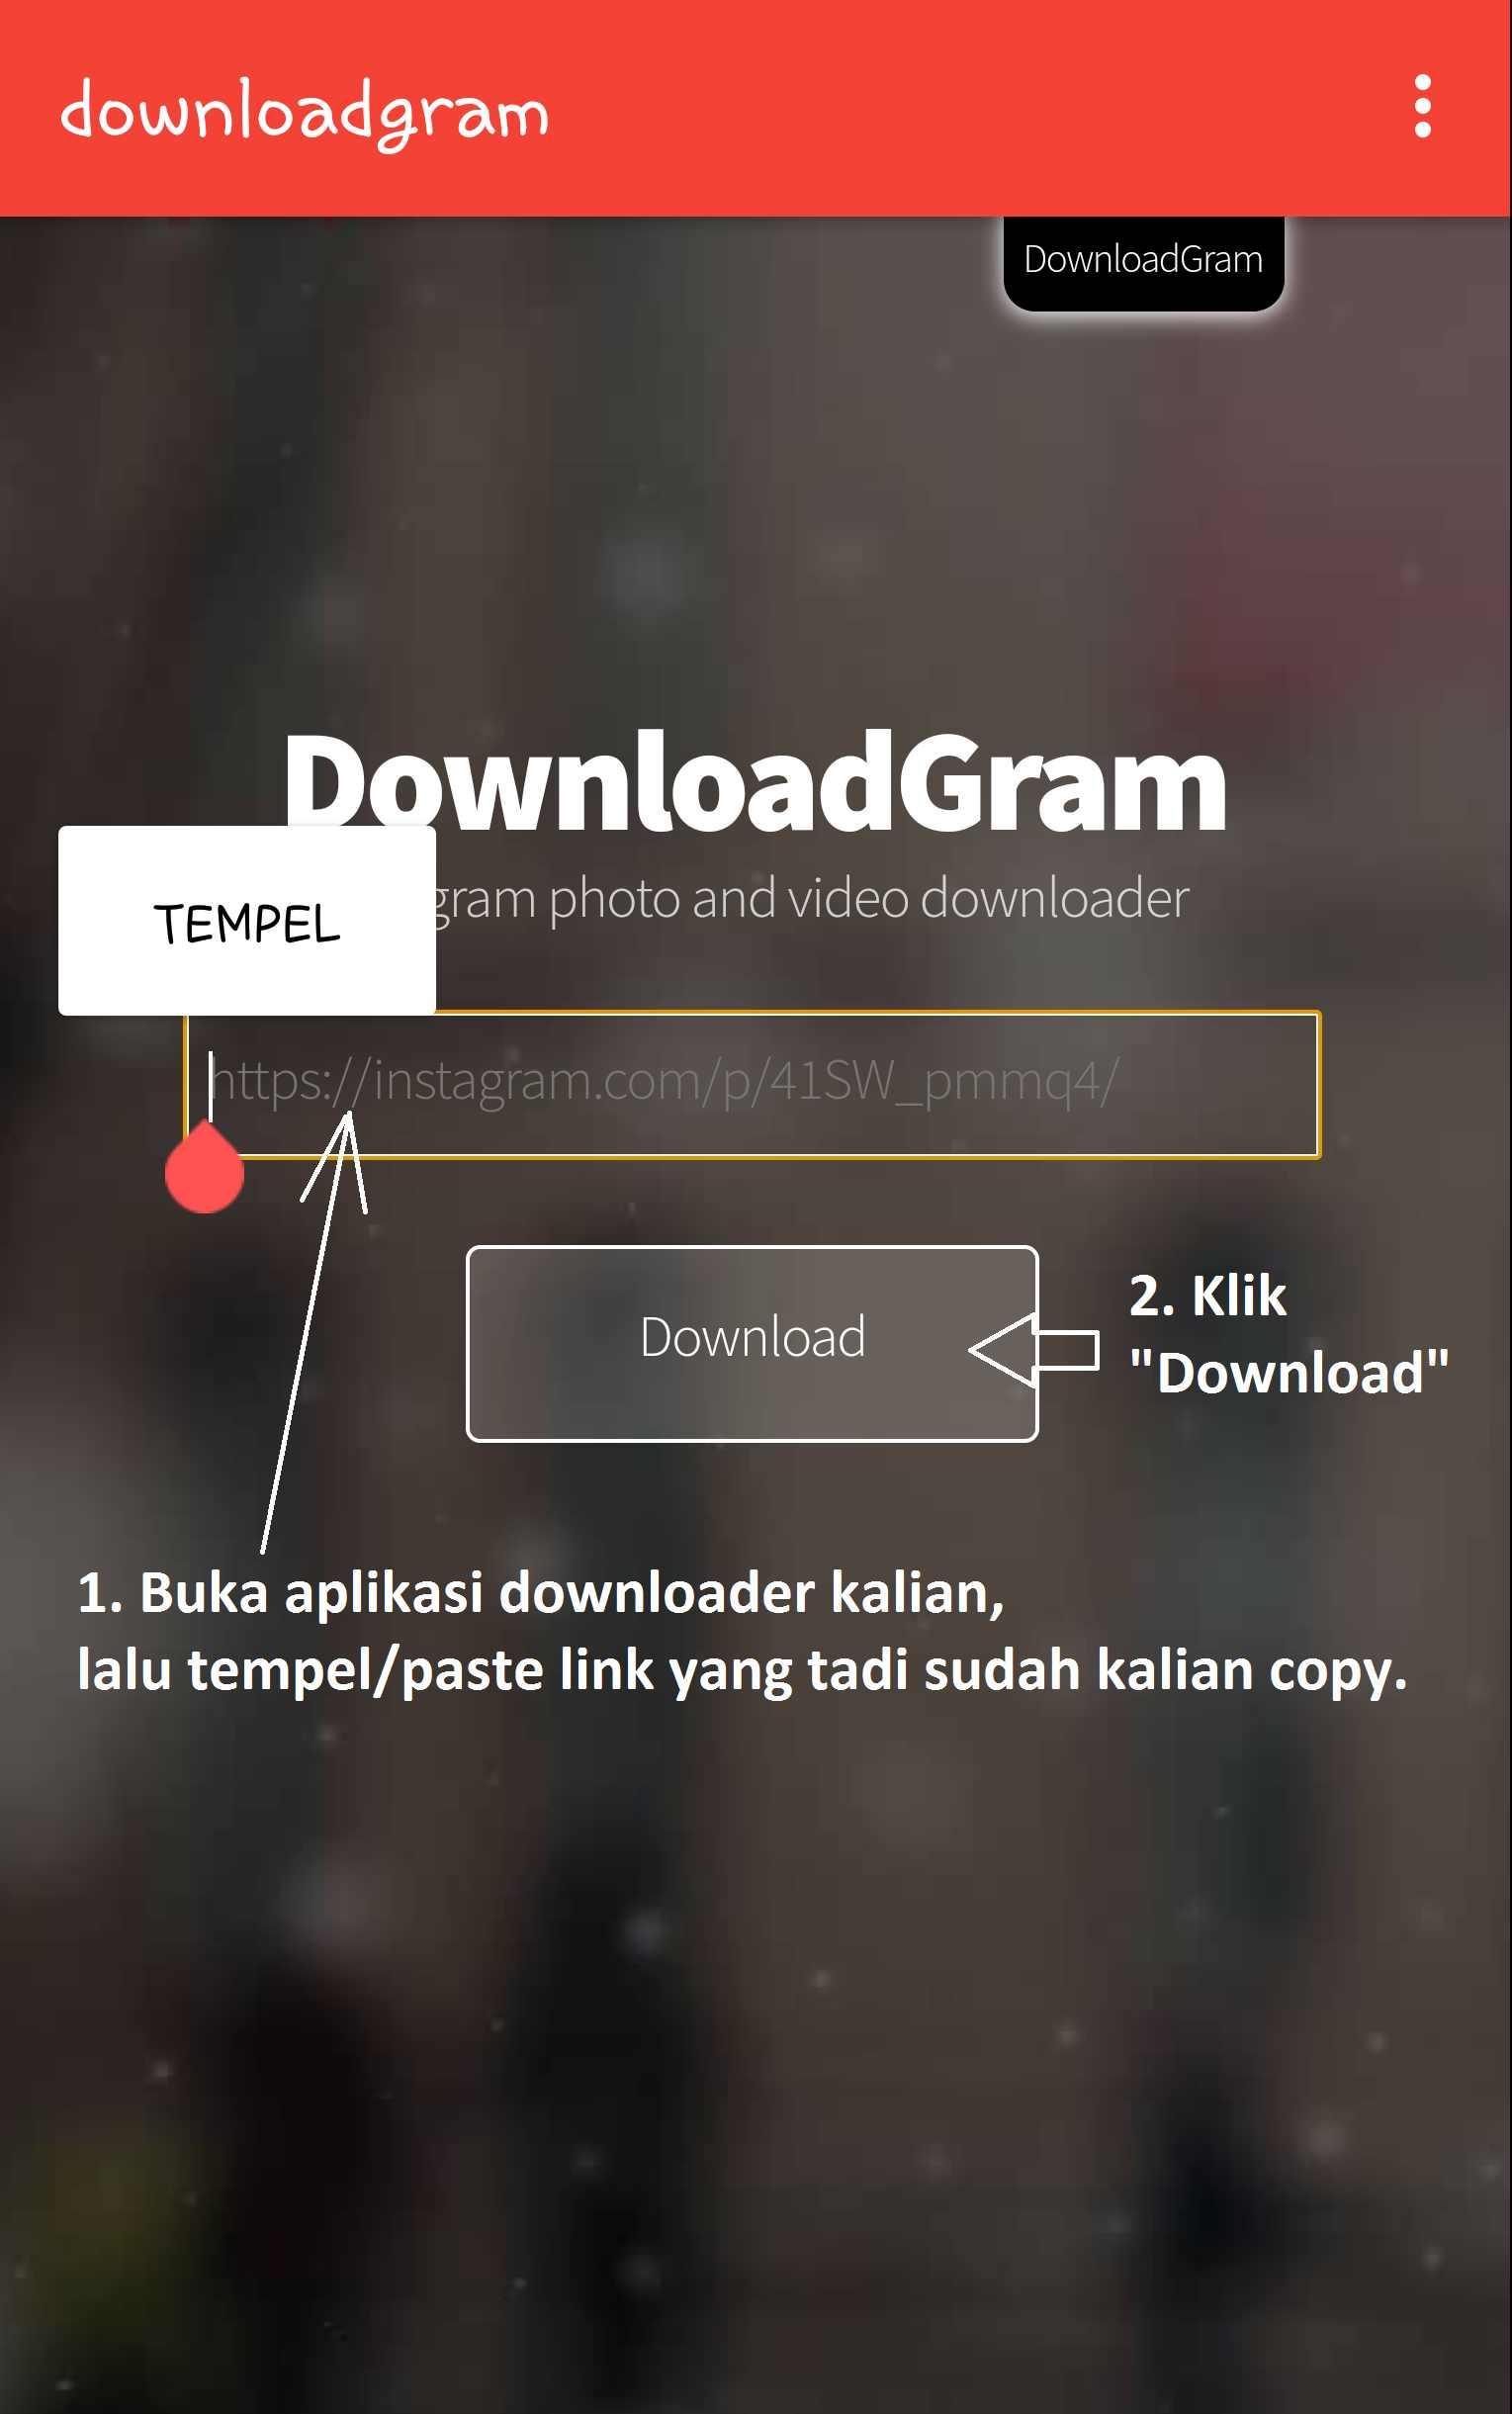 download gram